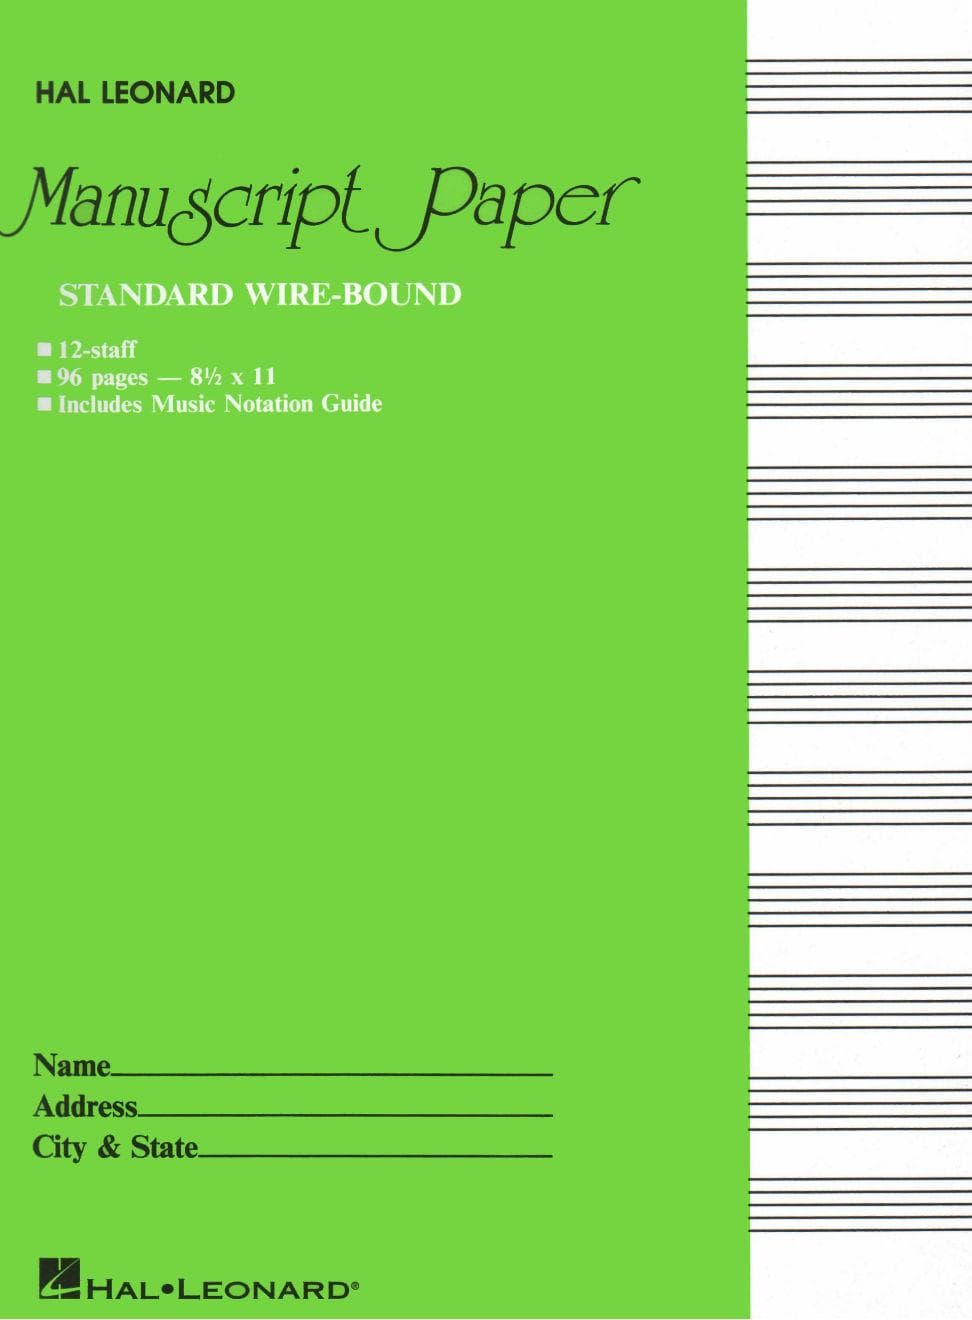 Standard Wirebound Manuscript Paper. Published by Hal Leonard.